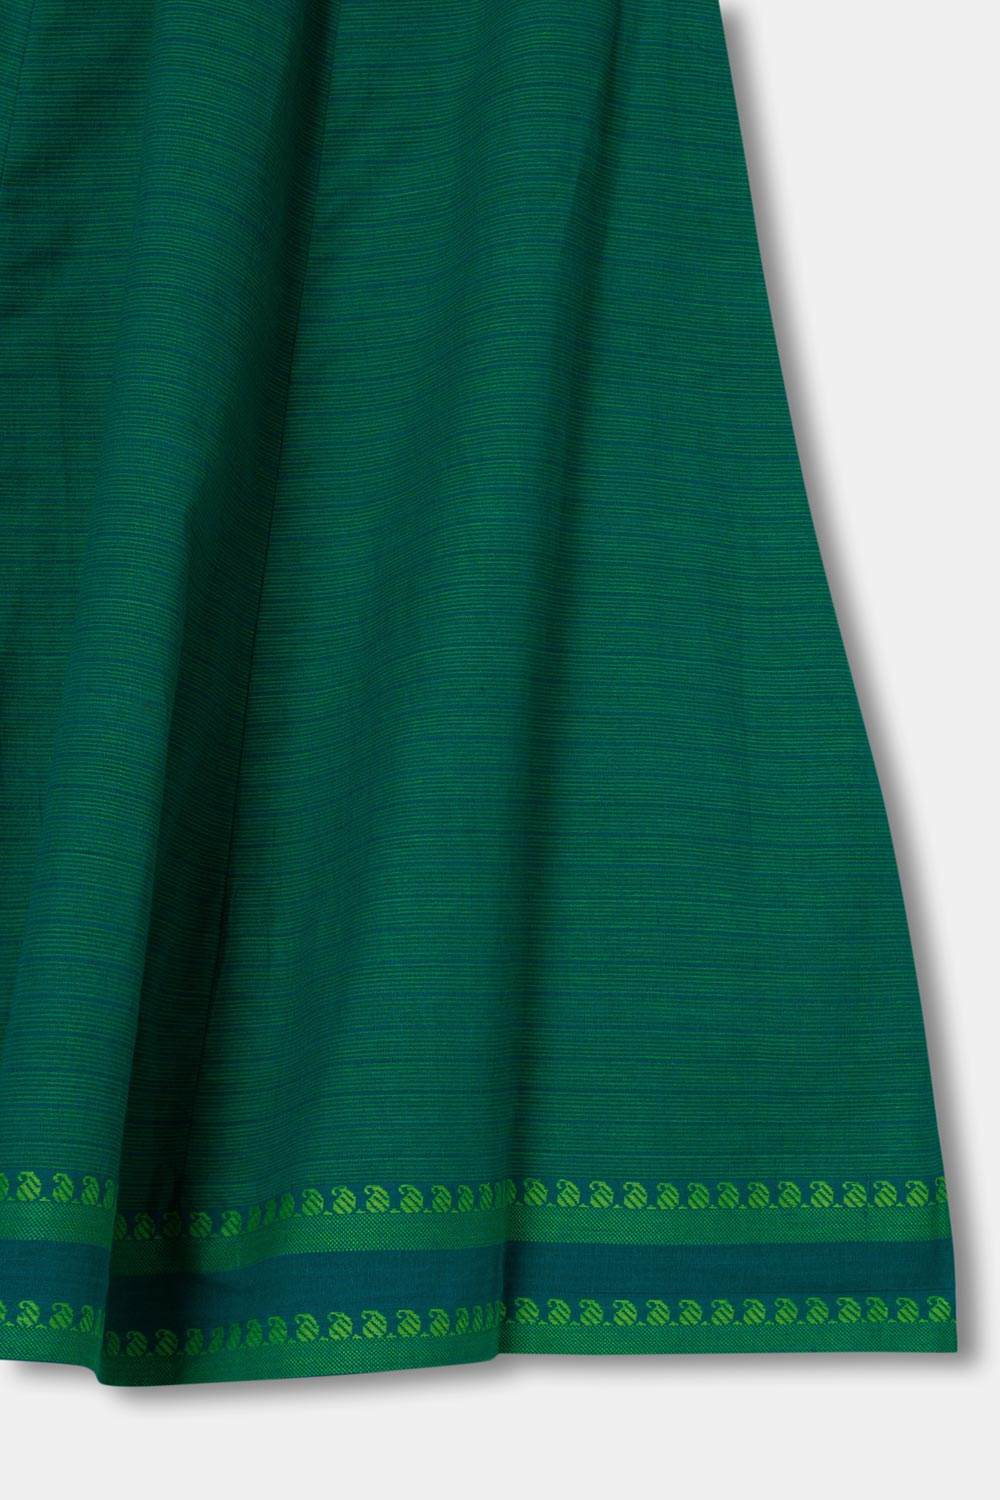 Chittythalli Girls Ethnic Wear Pavadai Set Cotton  Regular Fit  - Green  - PS60